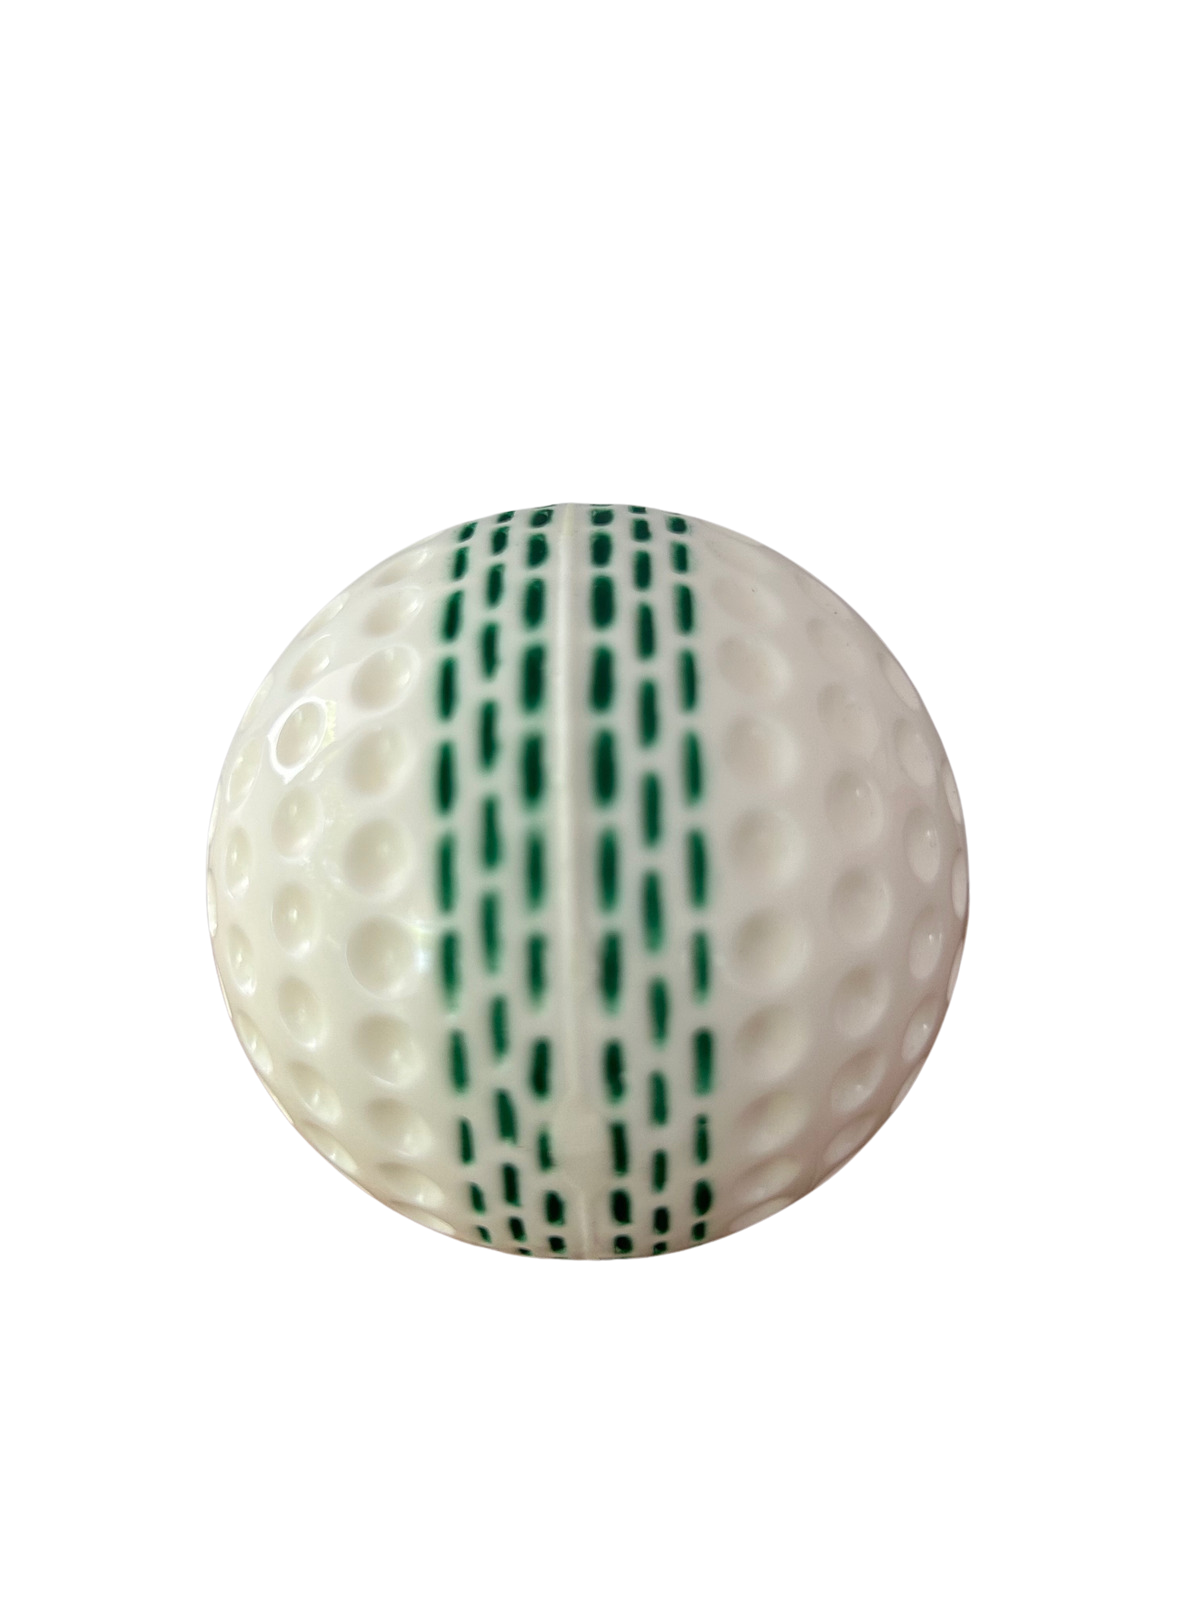 Dimple Ball - White with Green Seam (Dozen)